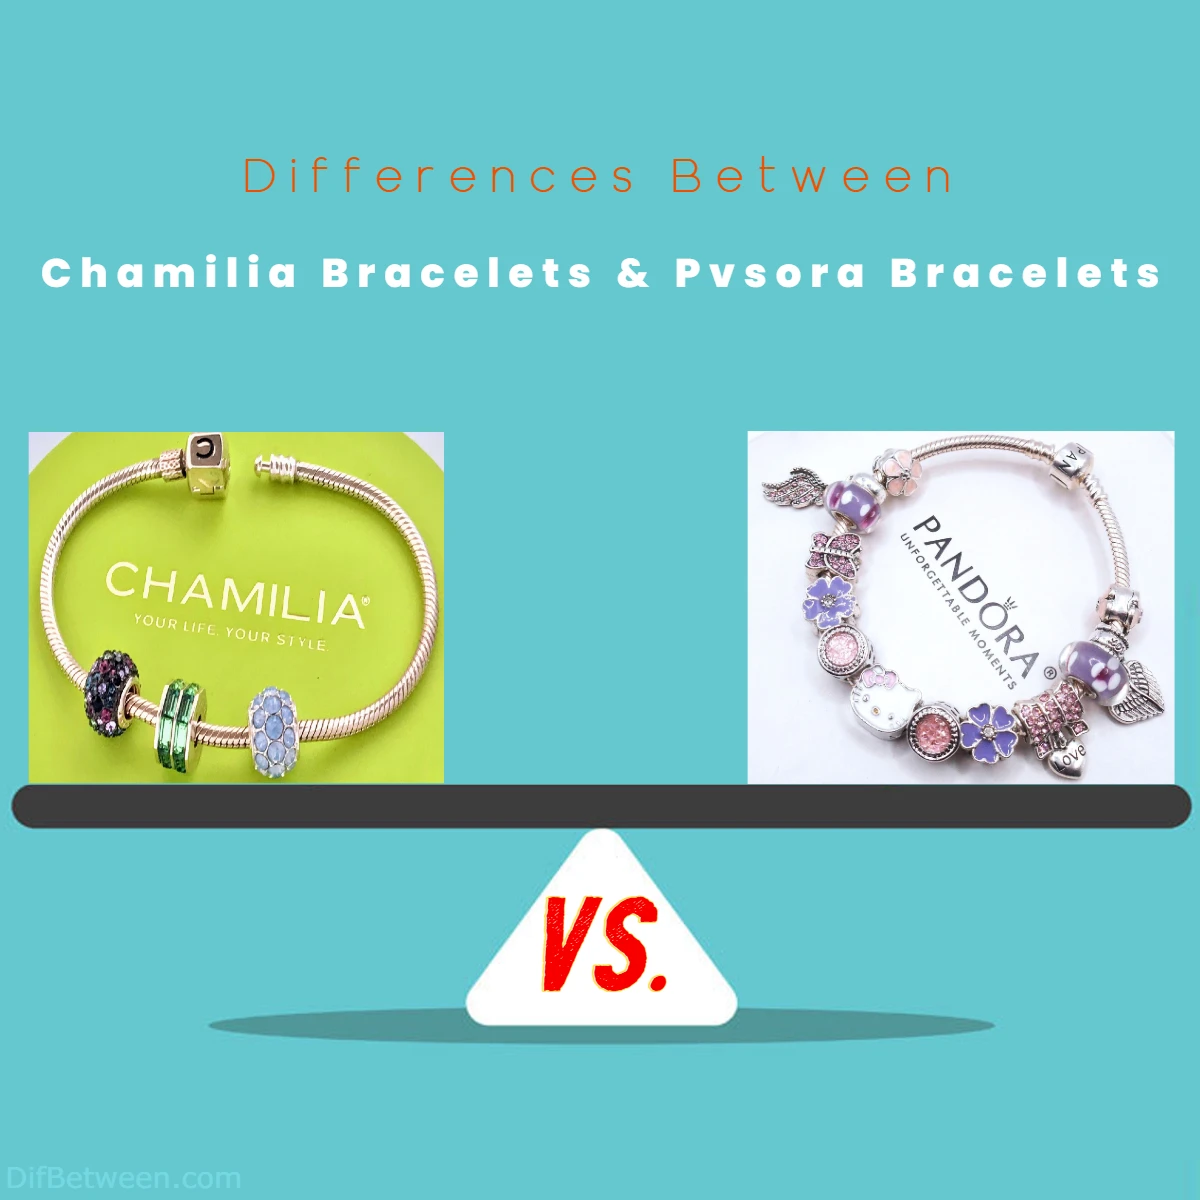 Differences Between Pvsora Bracelets and Chamilia Bracelets